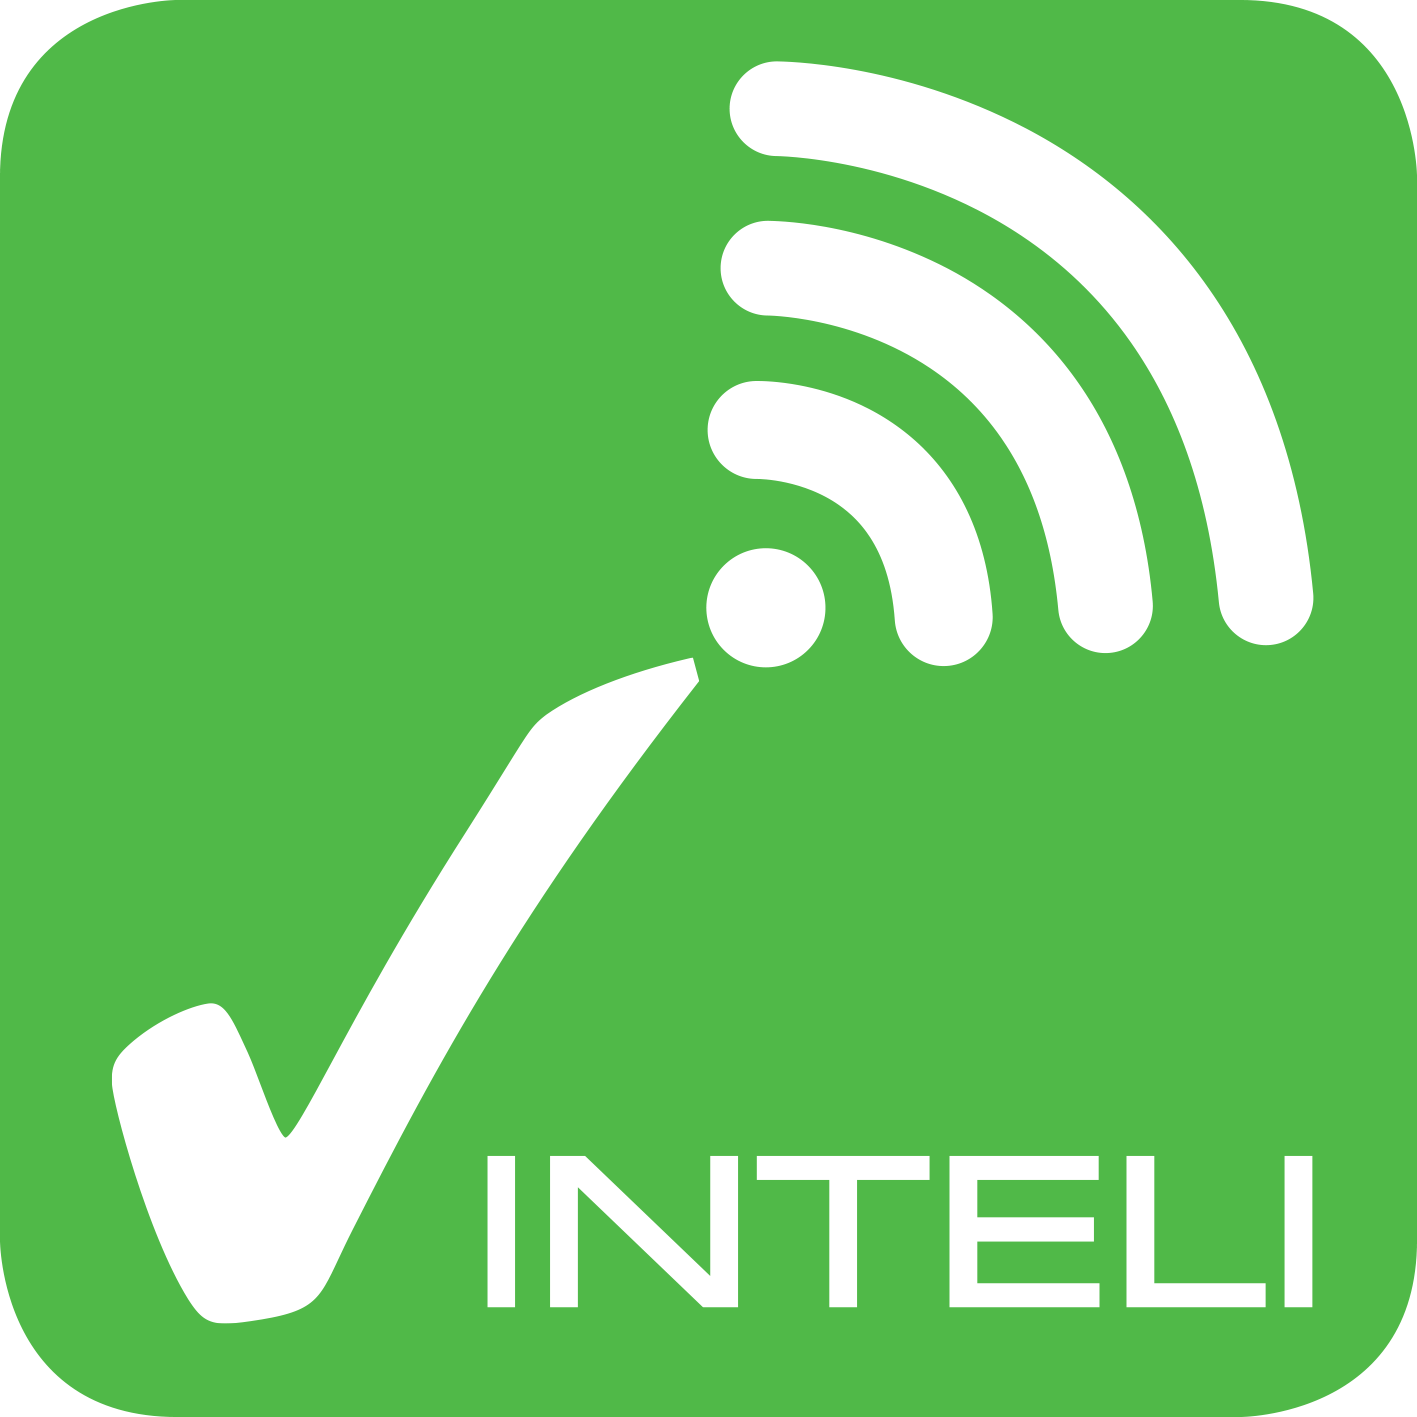 Inteli app logo